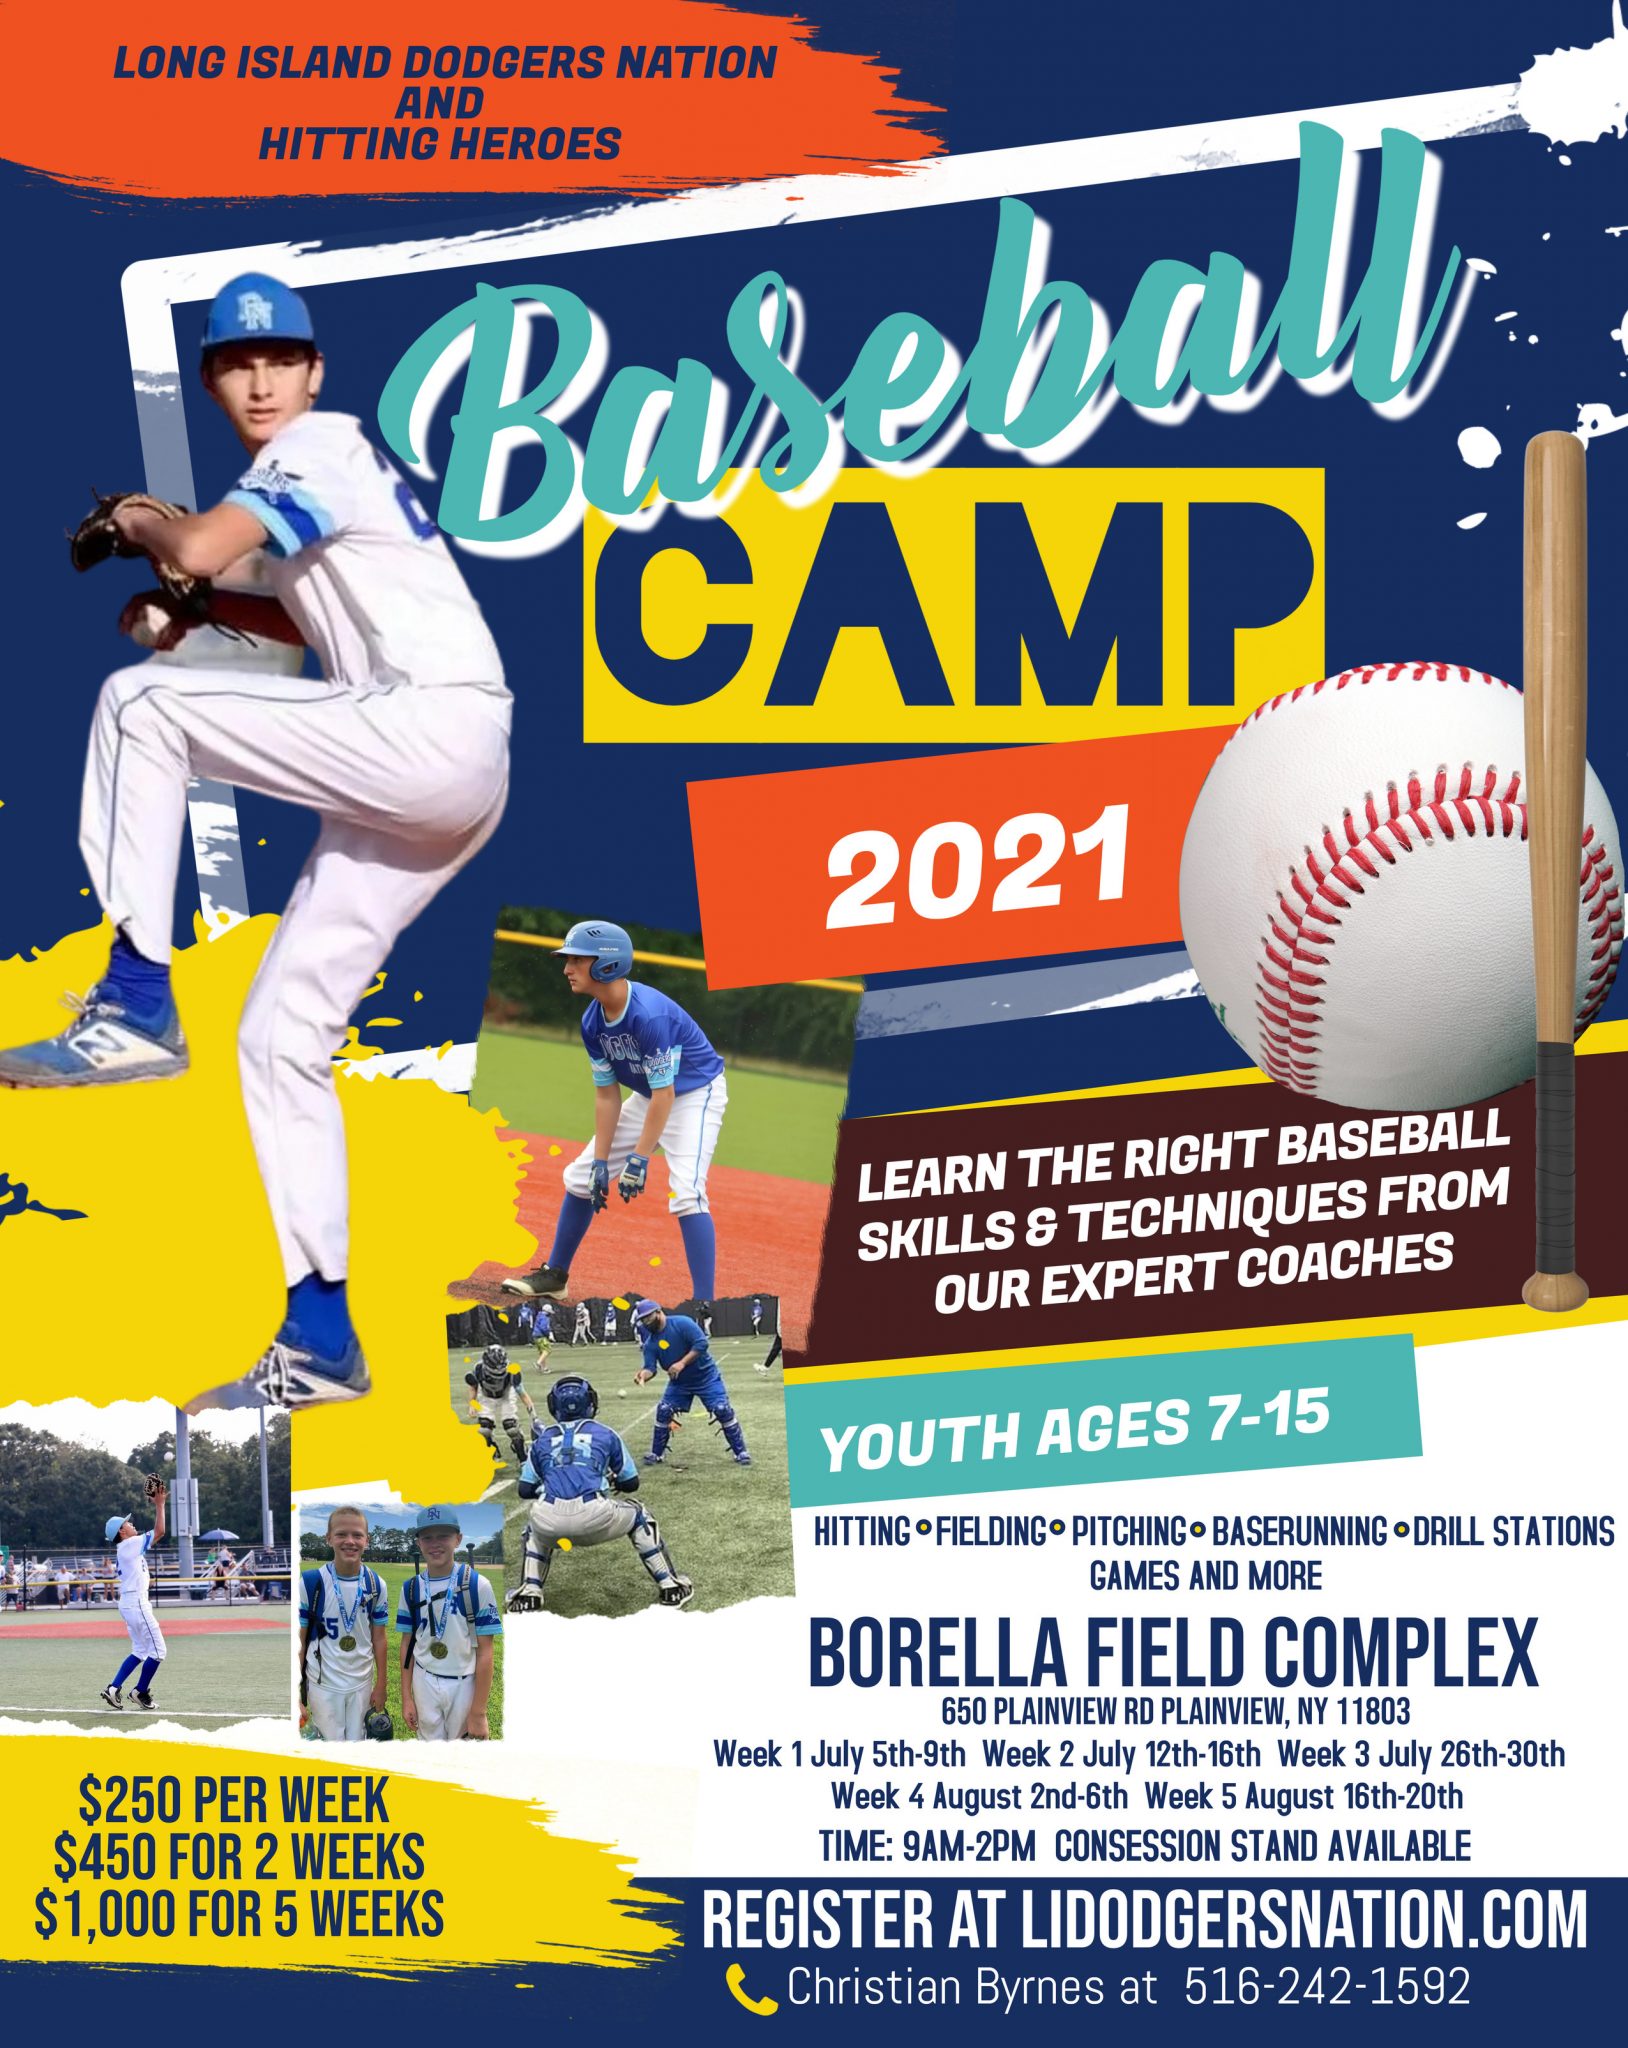 Baseball Camp LI Dodgers Nation Youth Travel Baseball